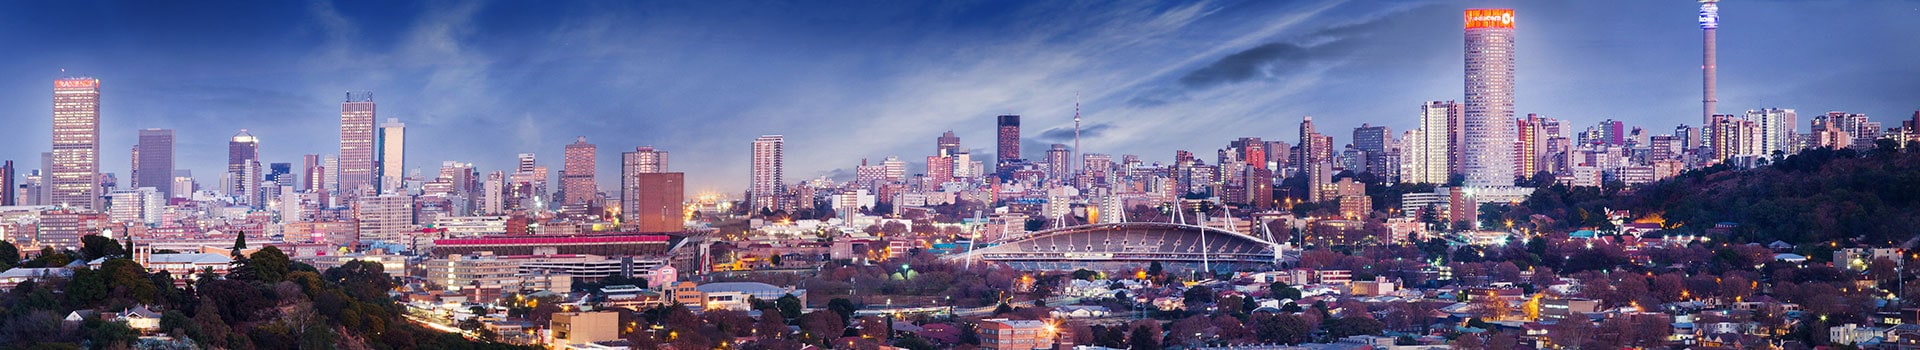 Francoforte - Johannesburg